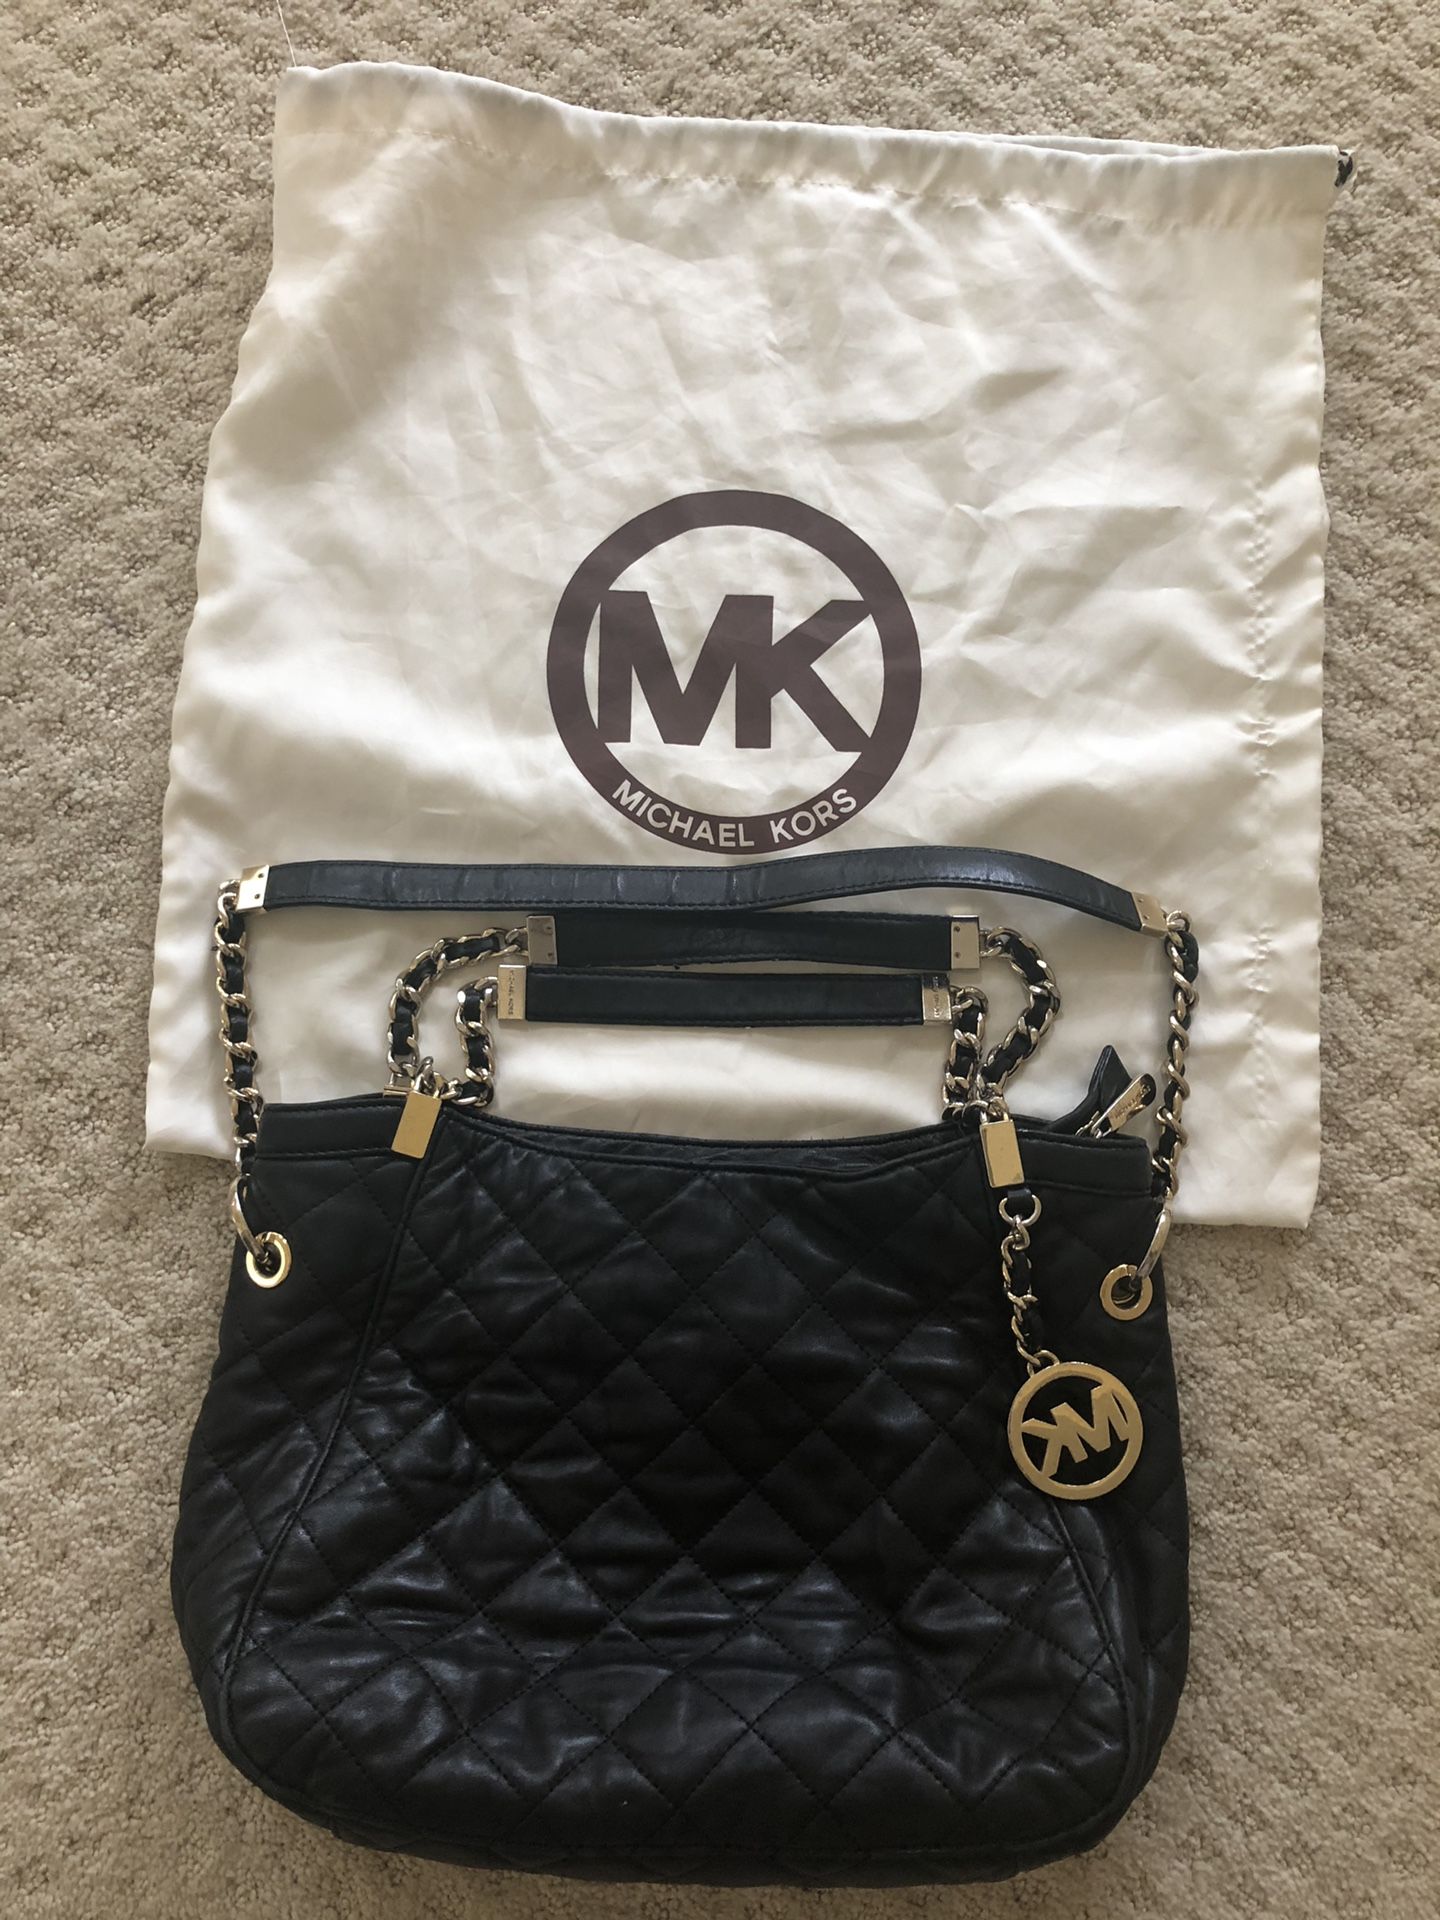 Michael Kors black leather bag